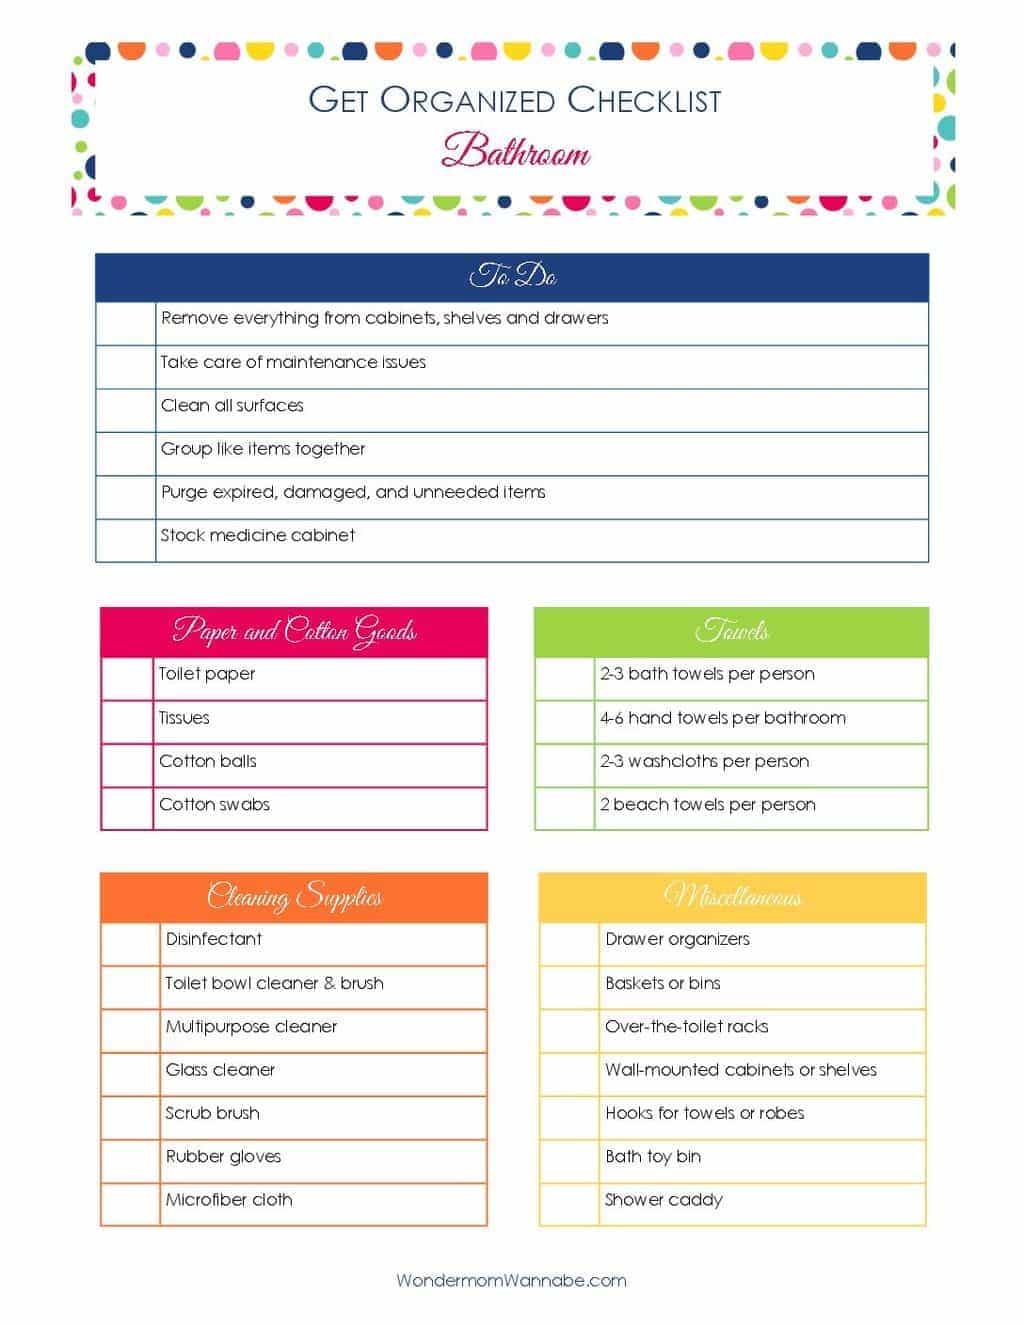 printable Get Organized Checklist for Your Bathroom